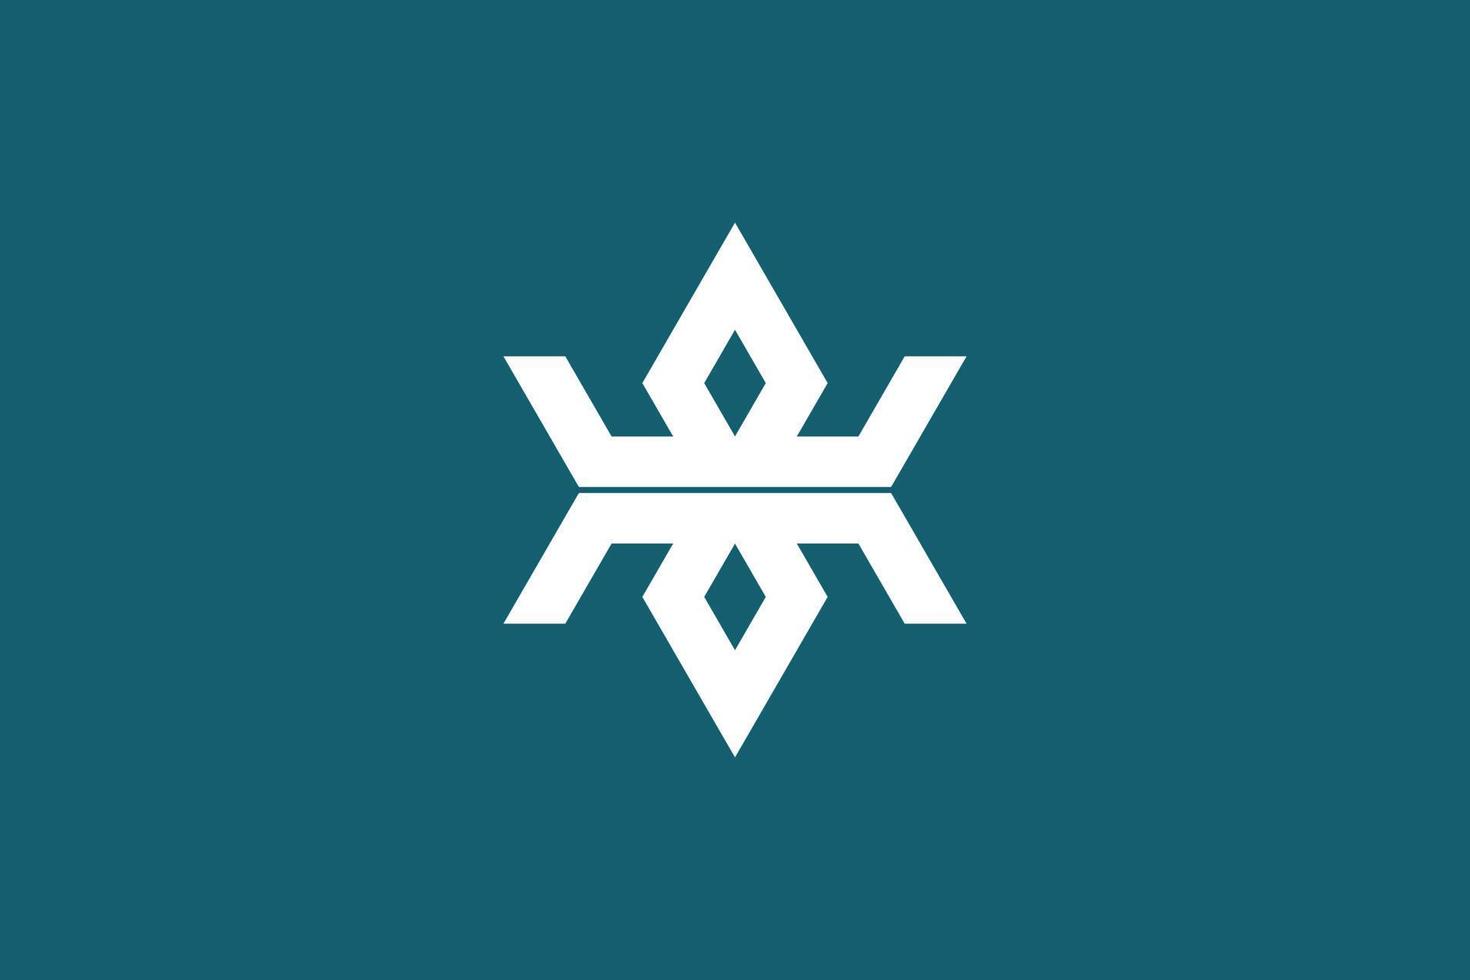 iwate flagga, japan prefektur. vektor illustration